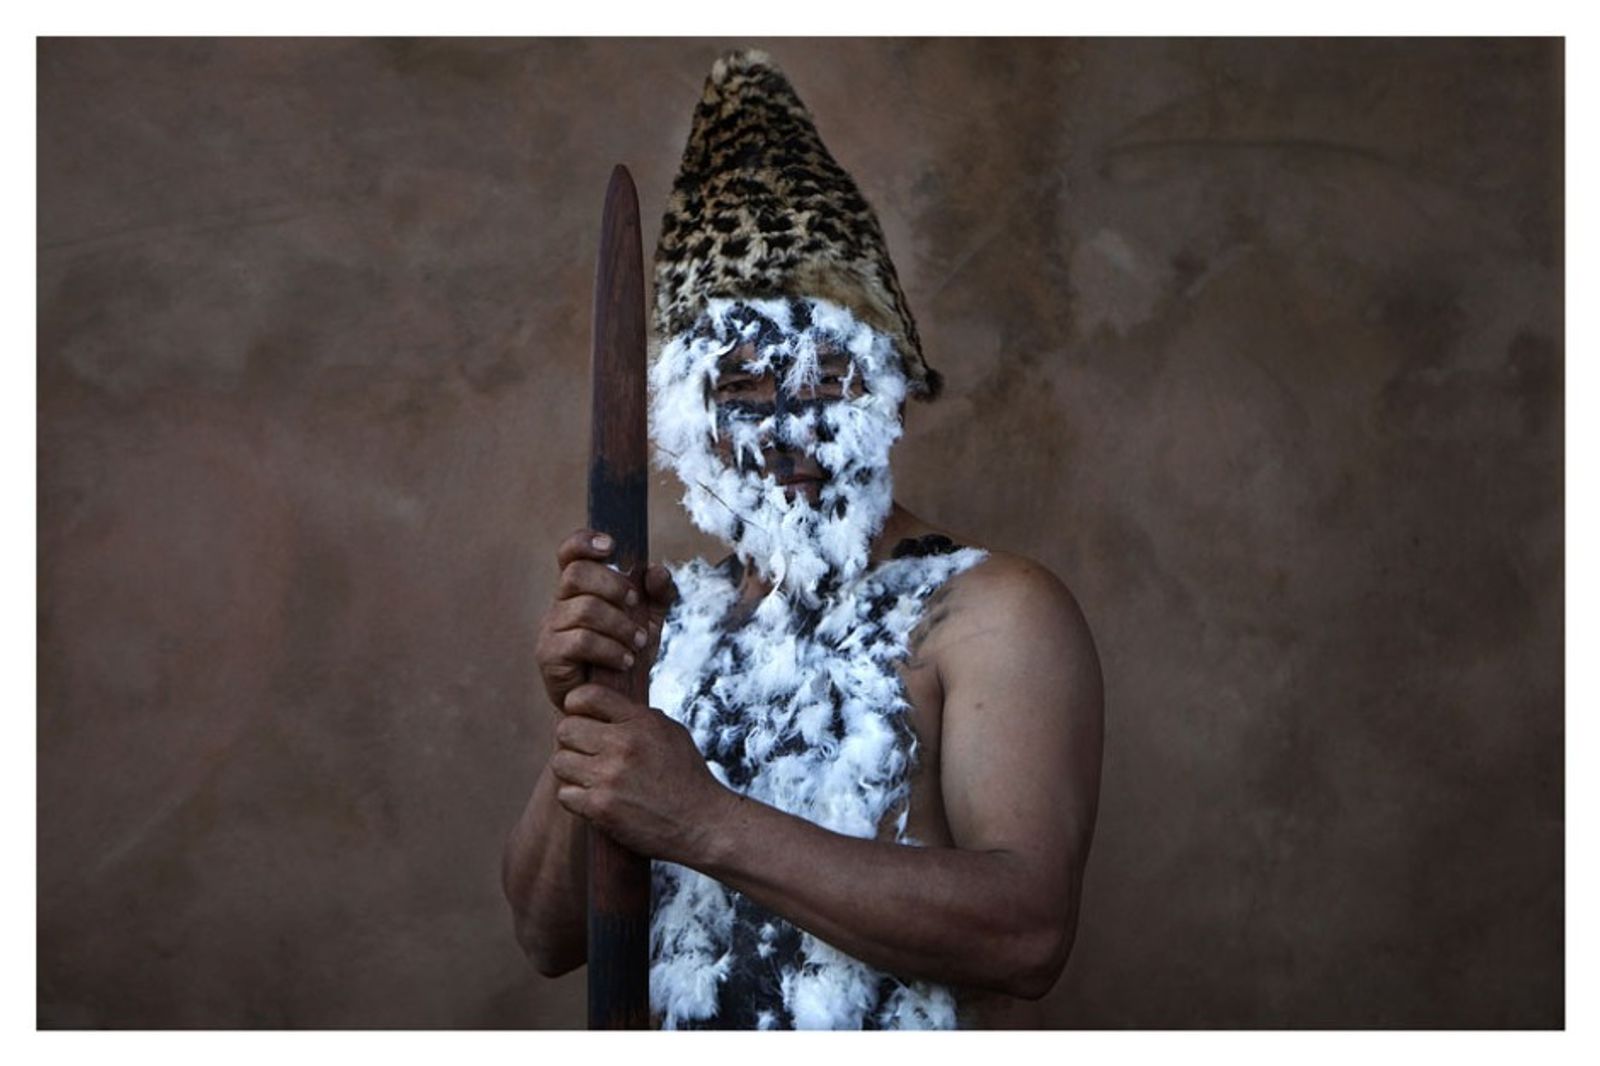 © Jorge Saenz - An Ache indigenous man participates of a burial ceremony at Ypetimi, Paraguay, June 1, 2010.